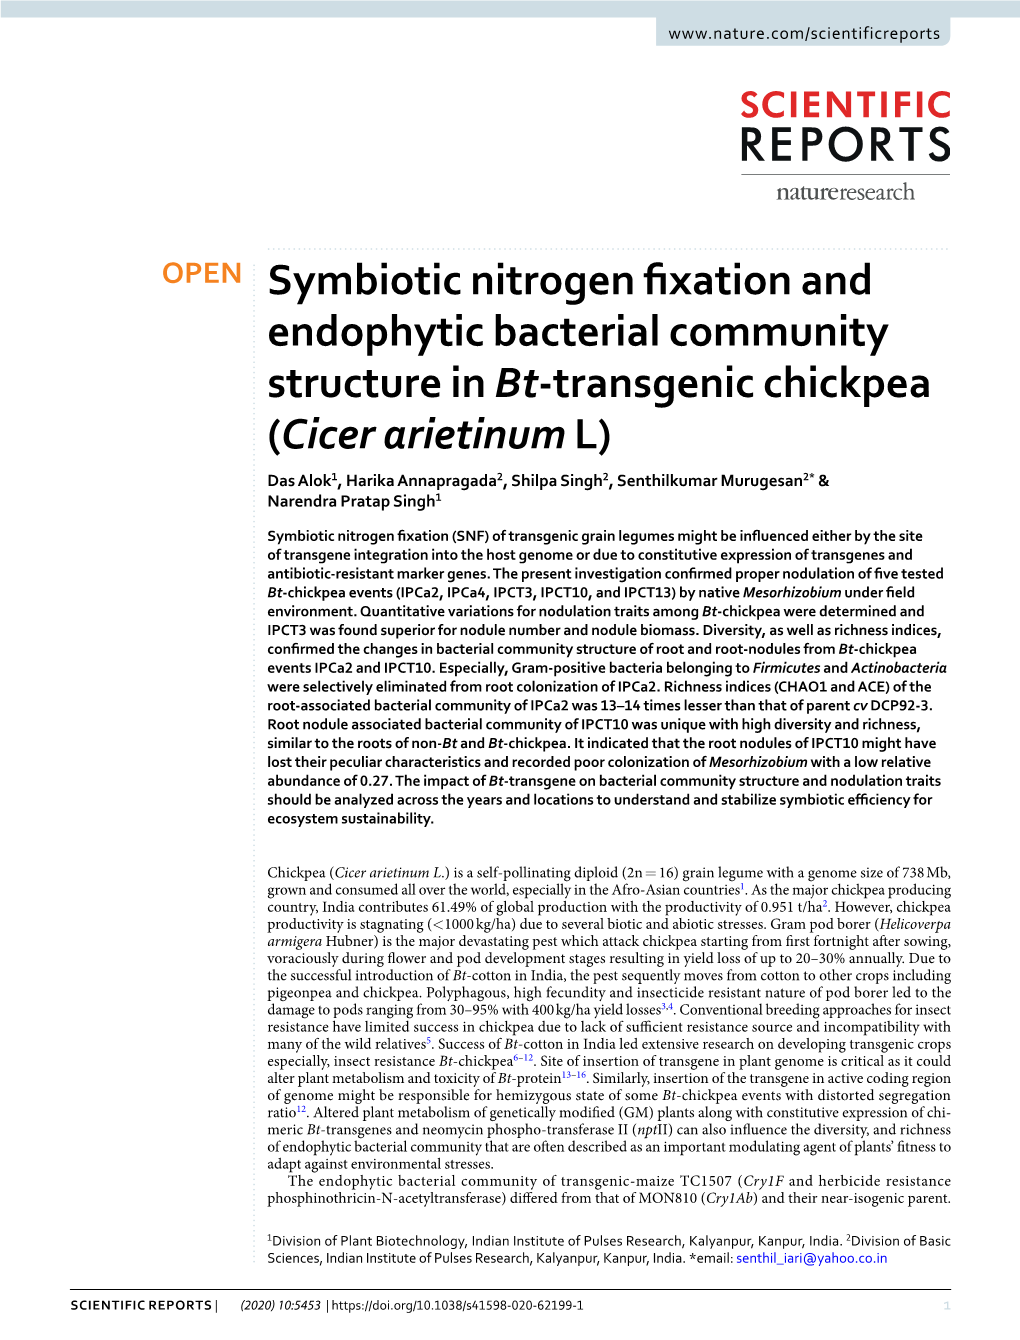 Symbiotic Nitrogen Fixation and Endophytic Bacterial